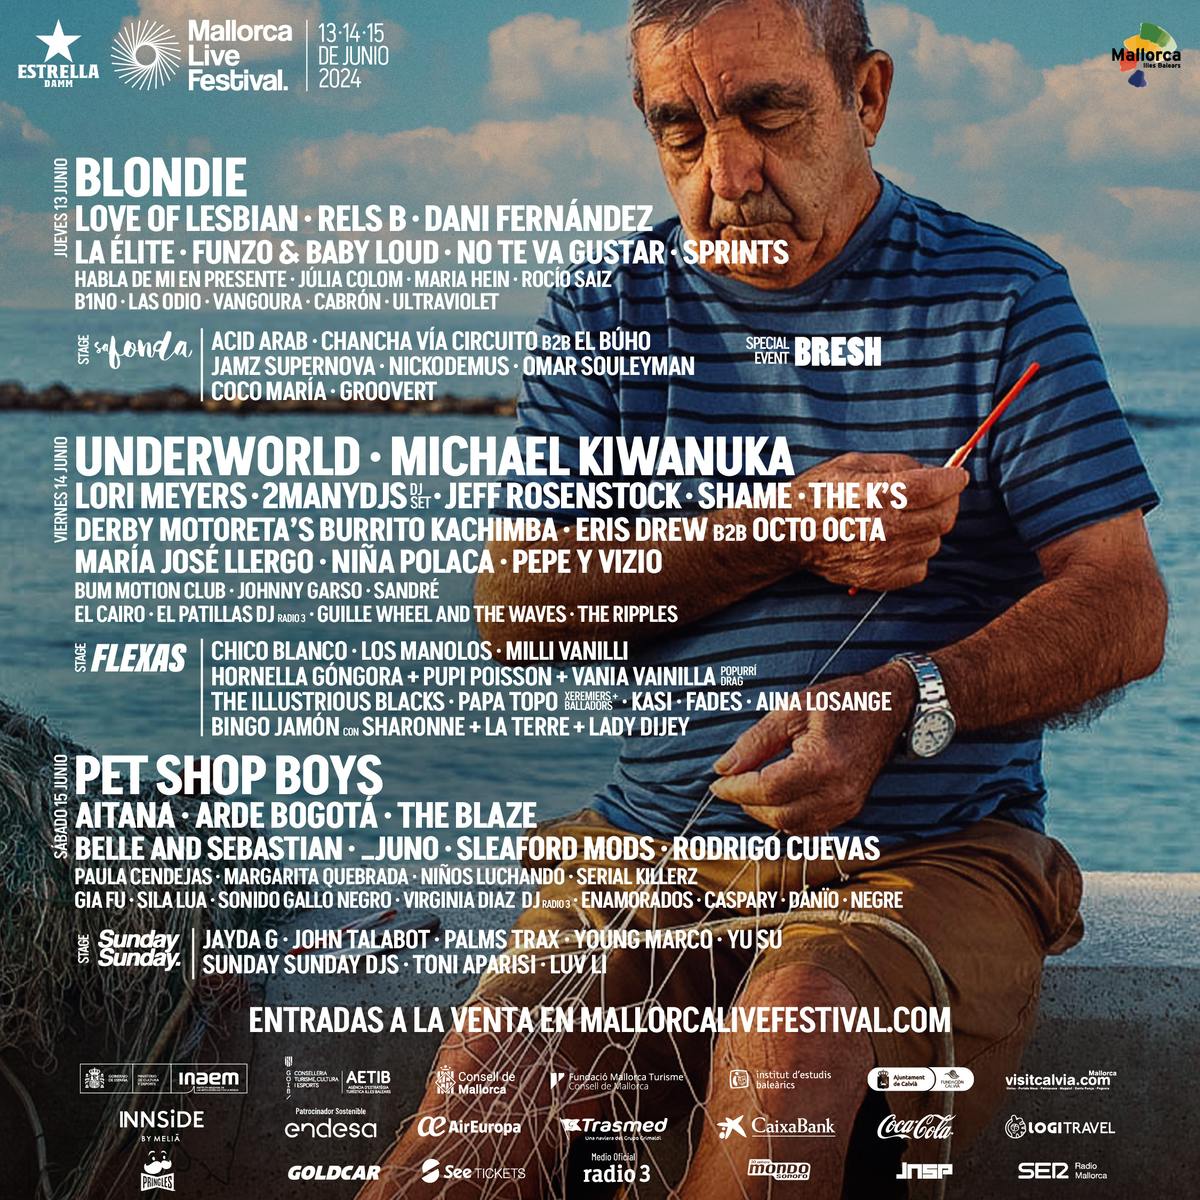 Wochenendticket (Freitag+Samstag) Mallorca Live Festival 2024